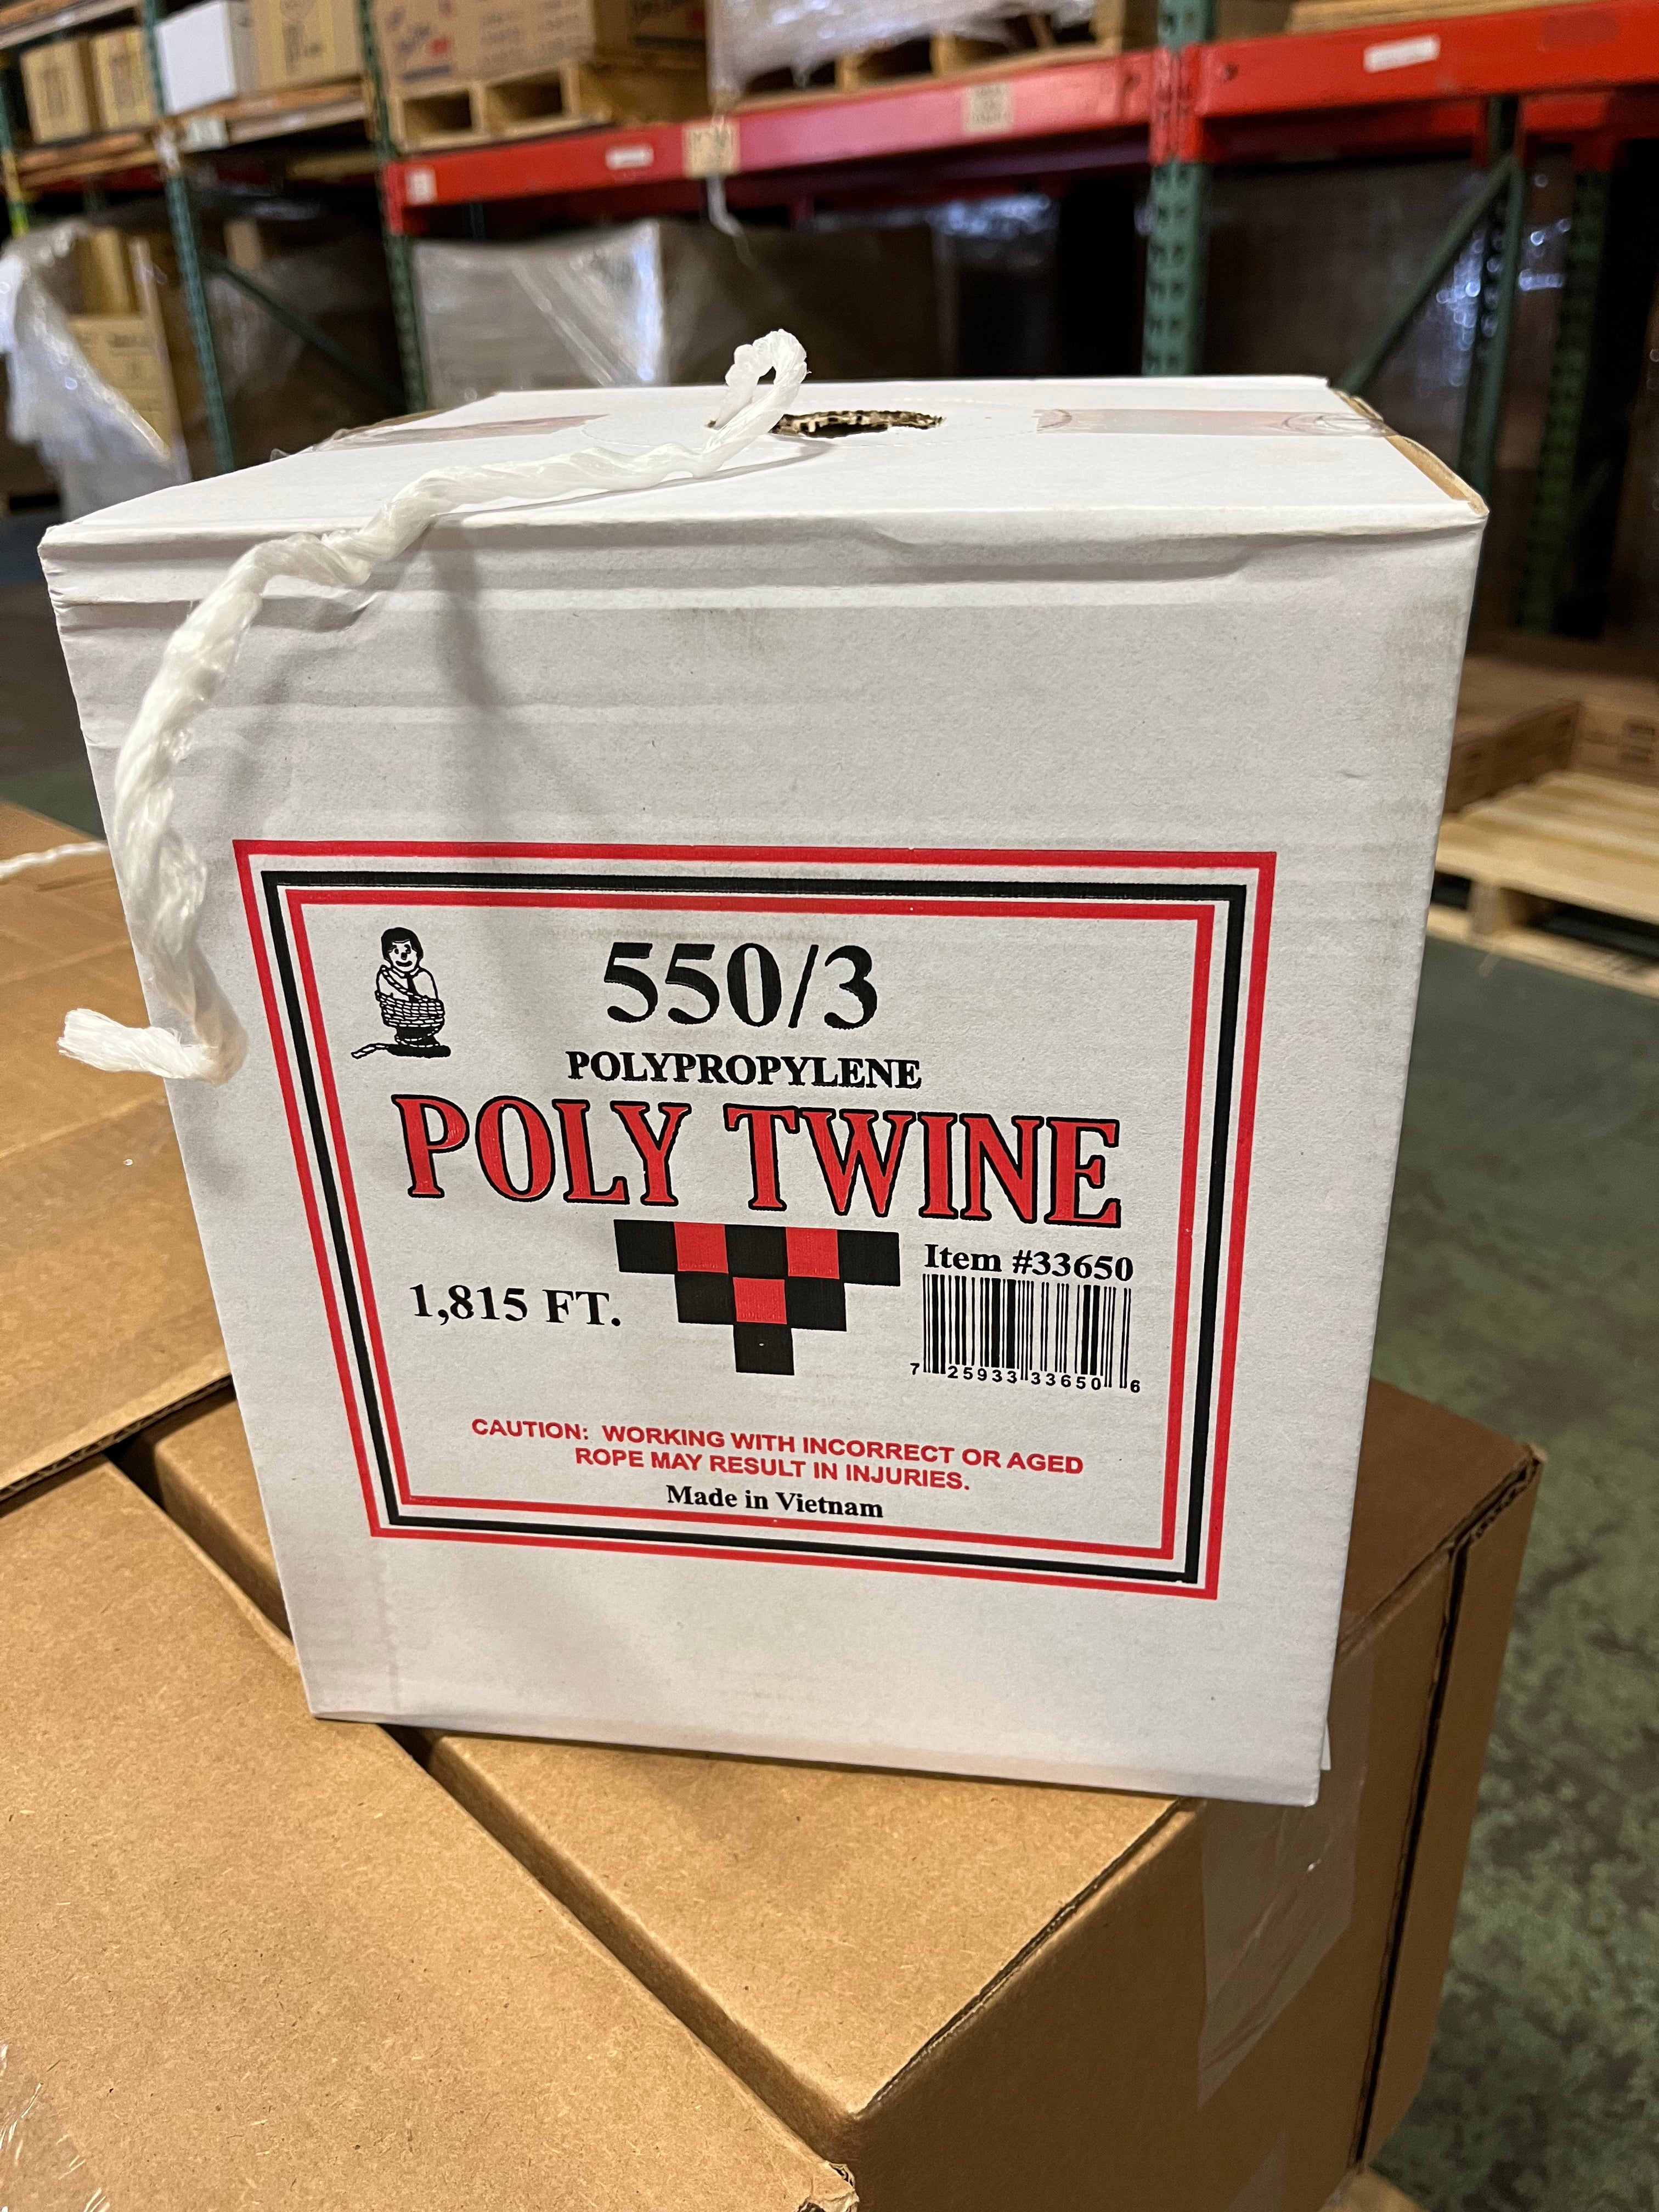 Polypropylene Tying Twine - Schermerhorn Bros. Co.